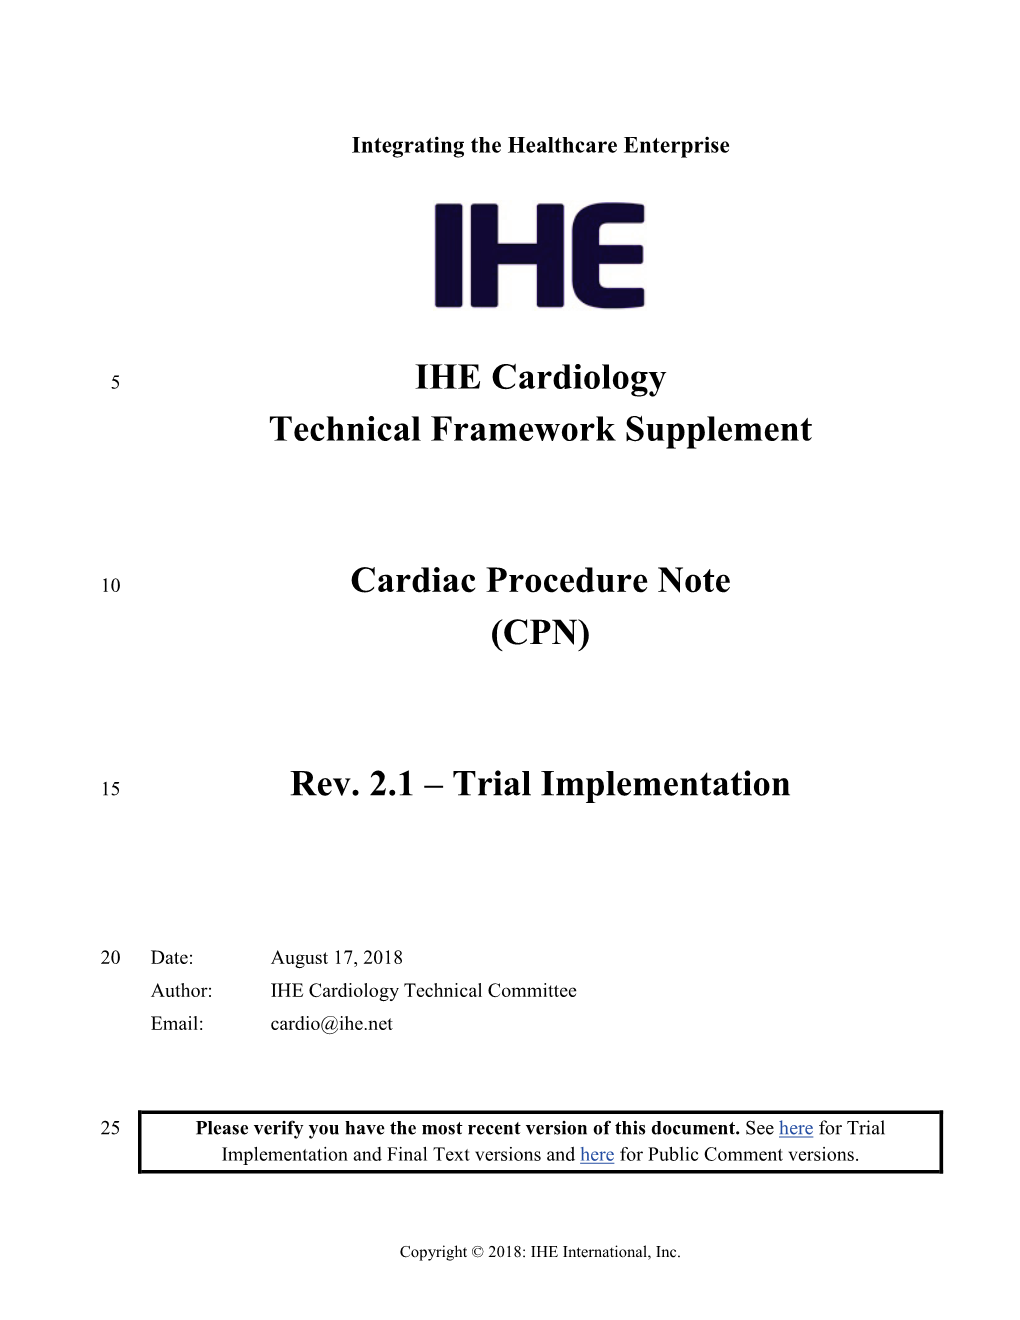 Cardiac Procedure Note (CPN)